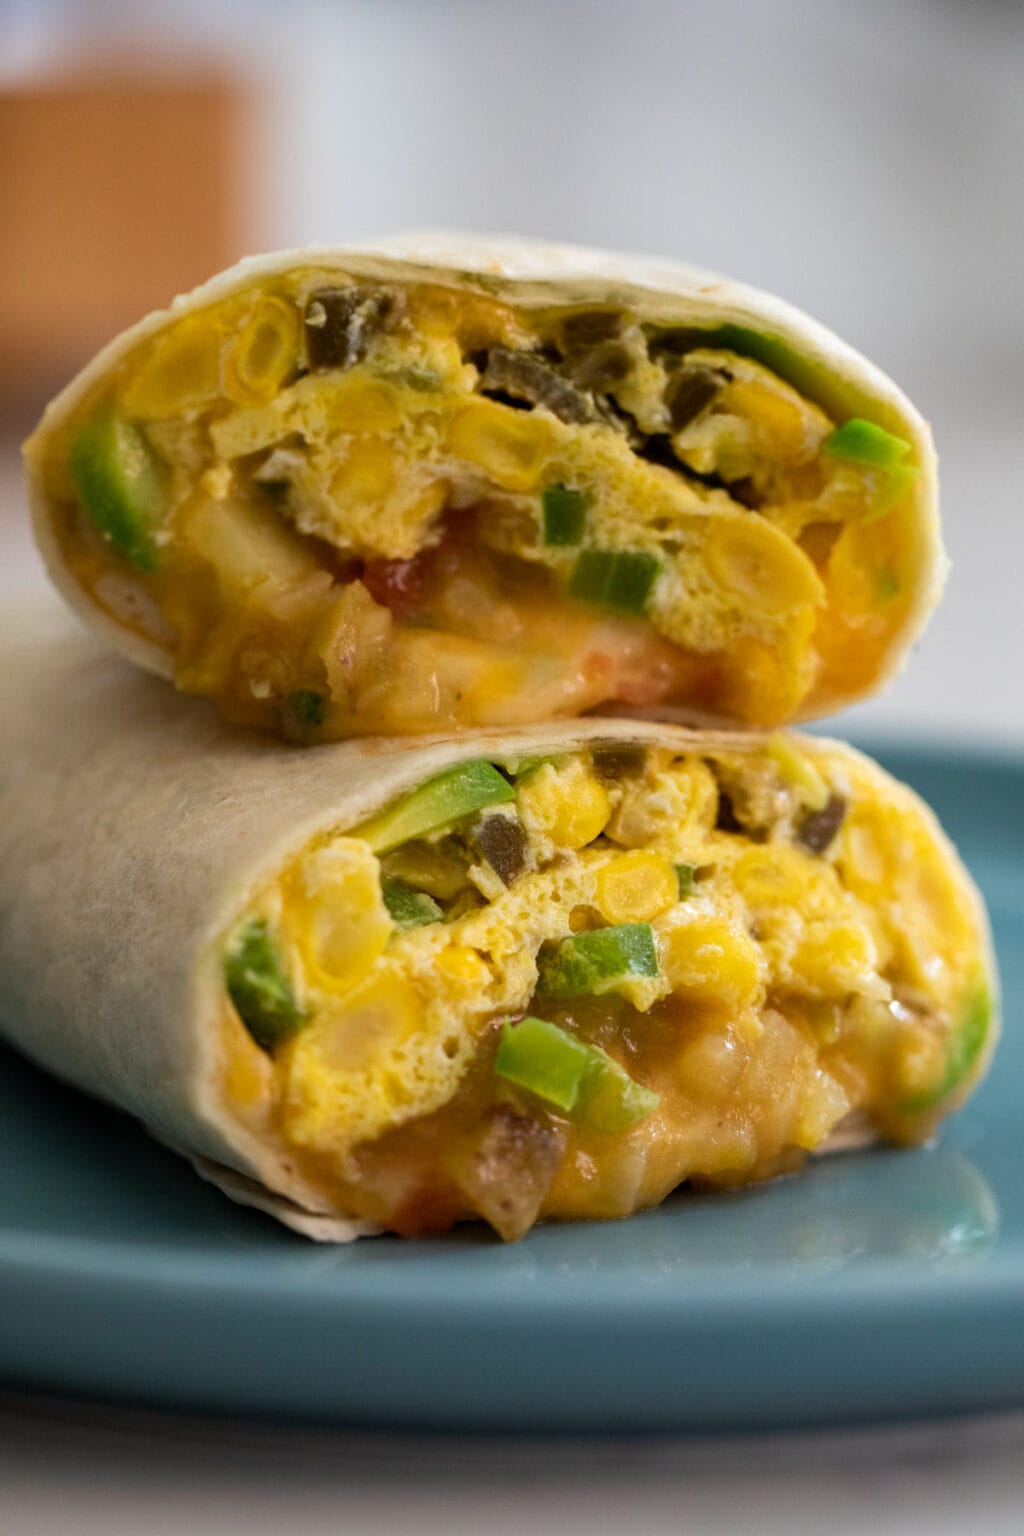 Microwave Breakfast Burrito with Potatoes - 10 Minute Recipe